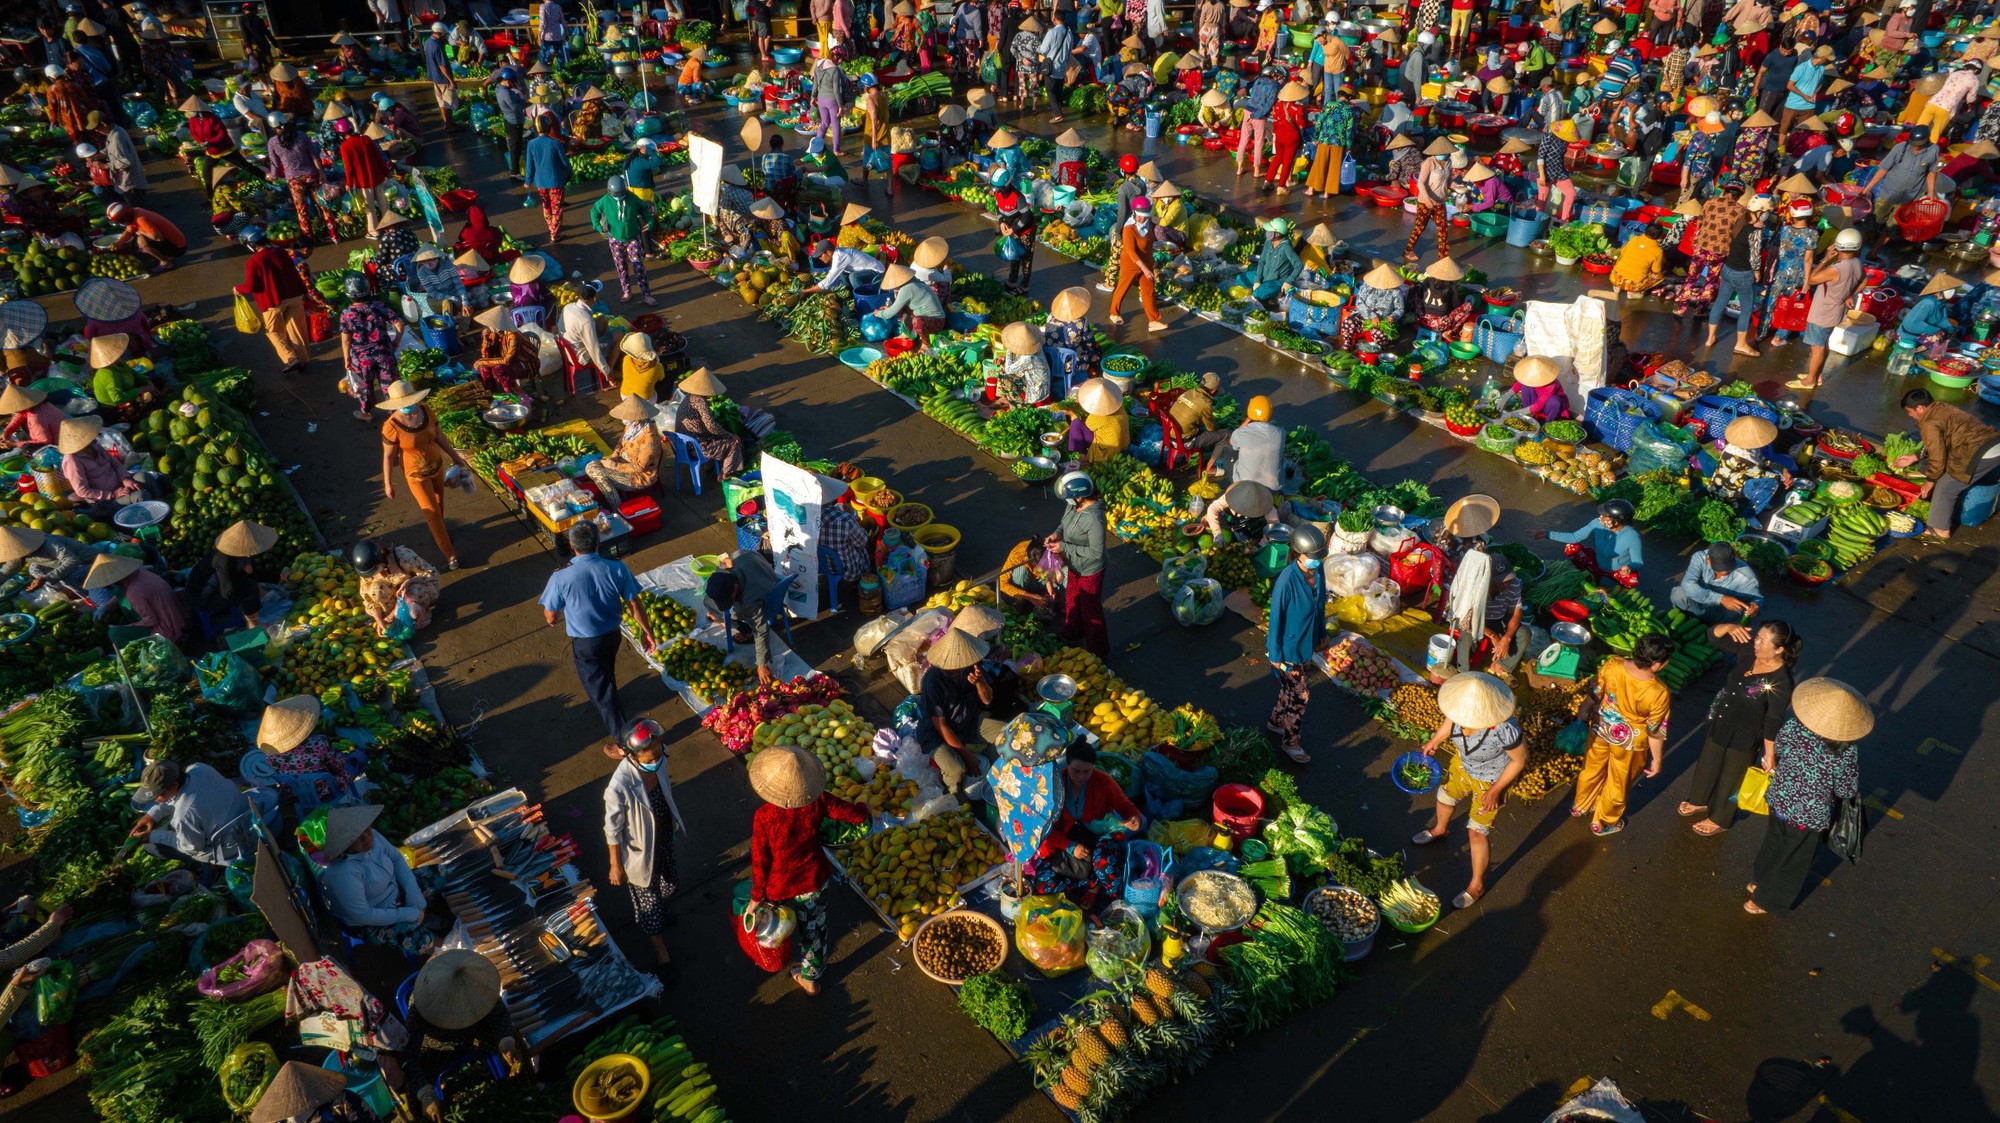 Unique scene of the 'unique' market in the West - Photo 3.